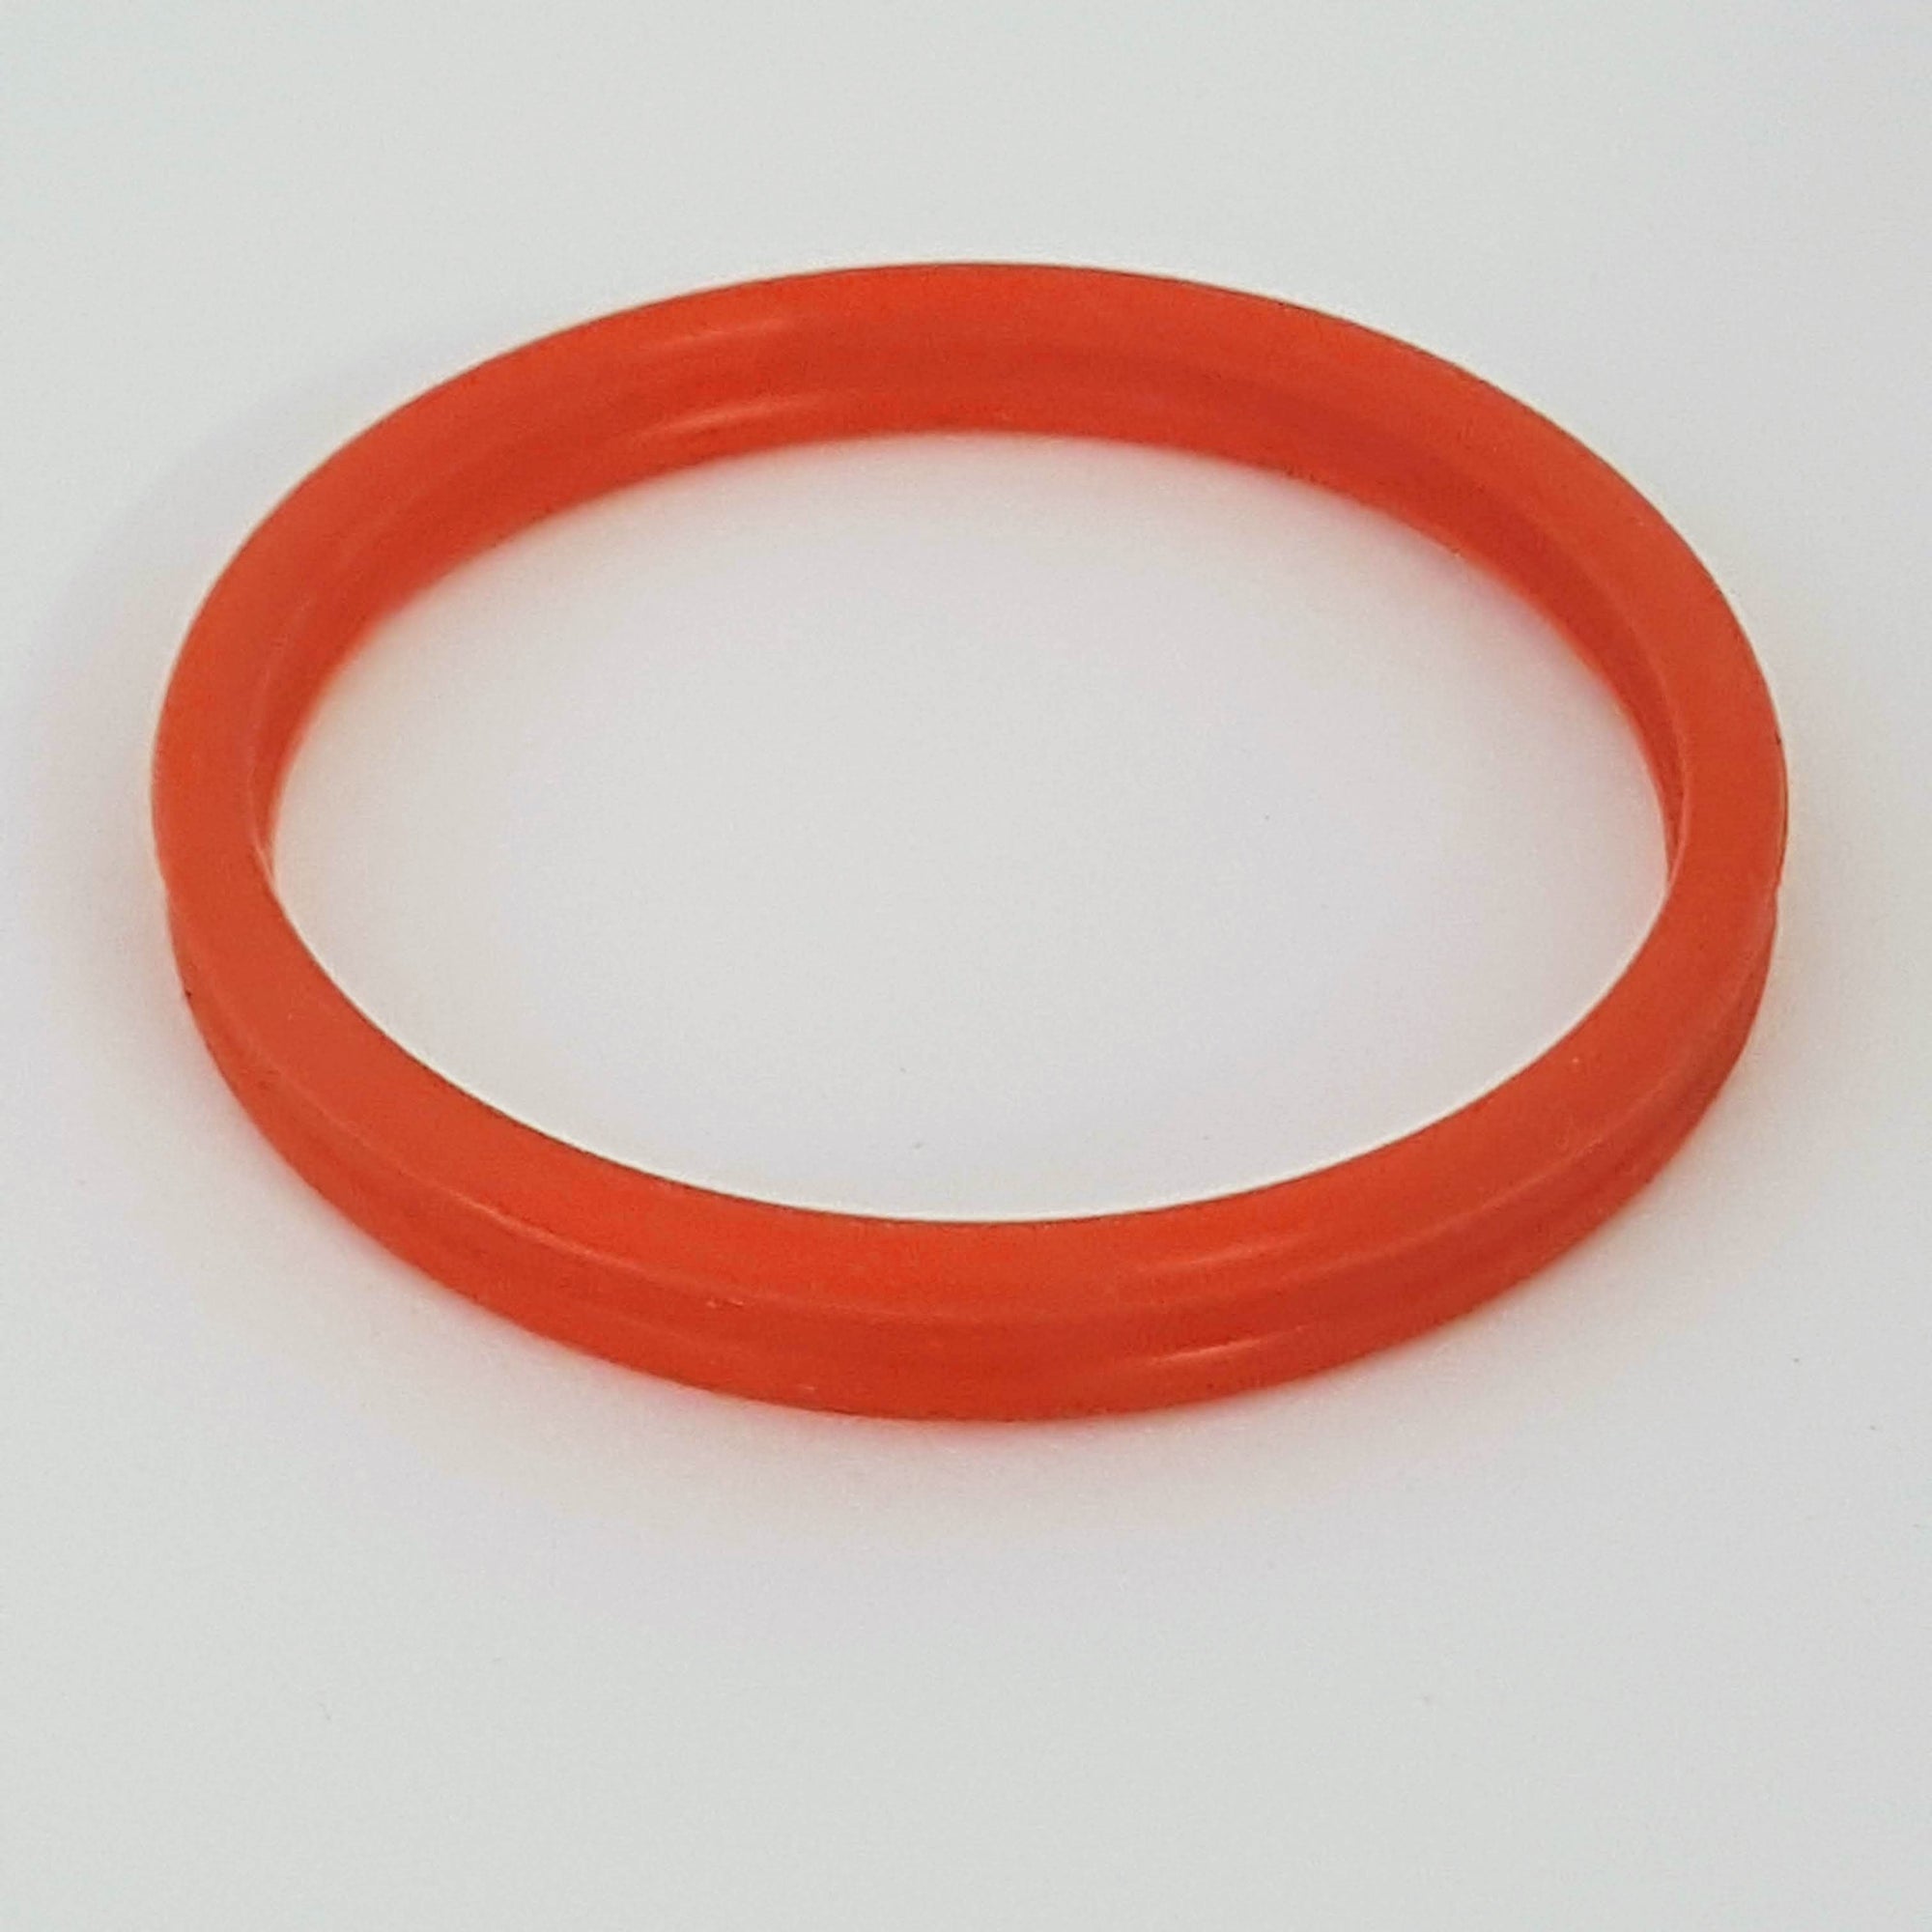 Quartz Sleeve O'Ring for Pondmax Filters